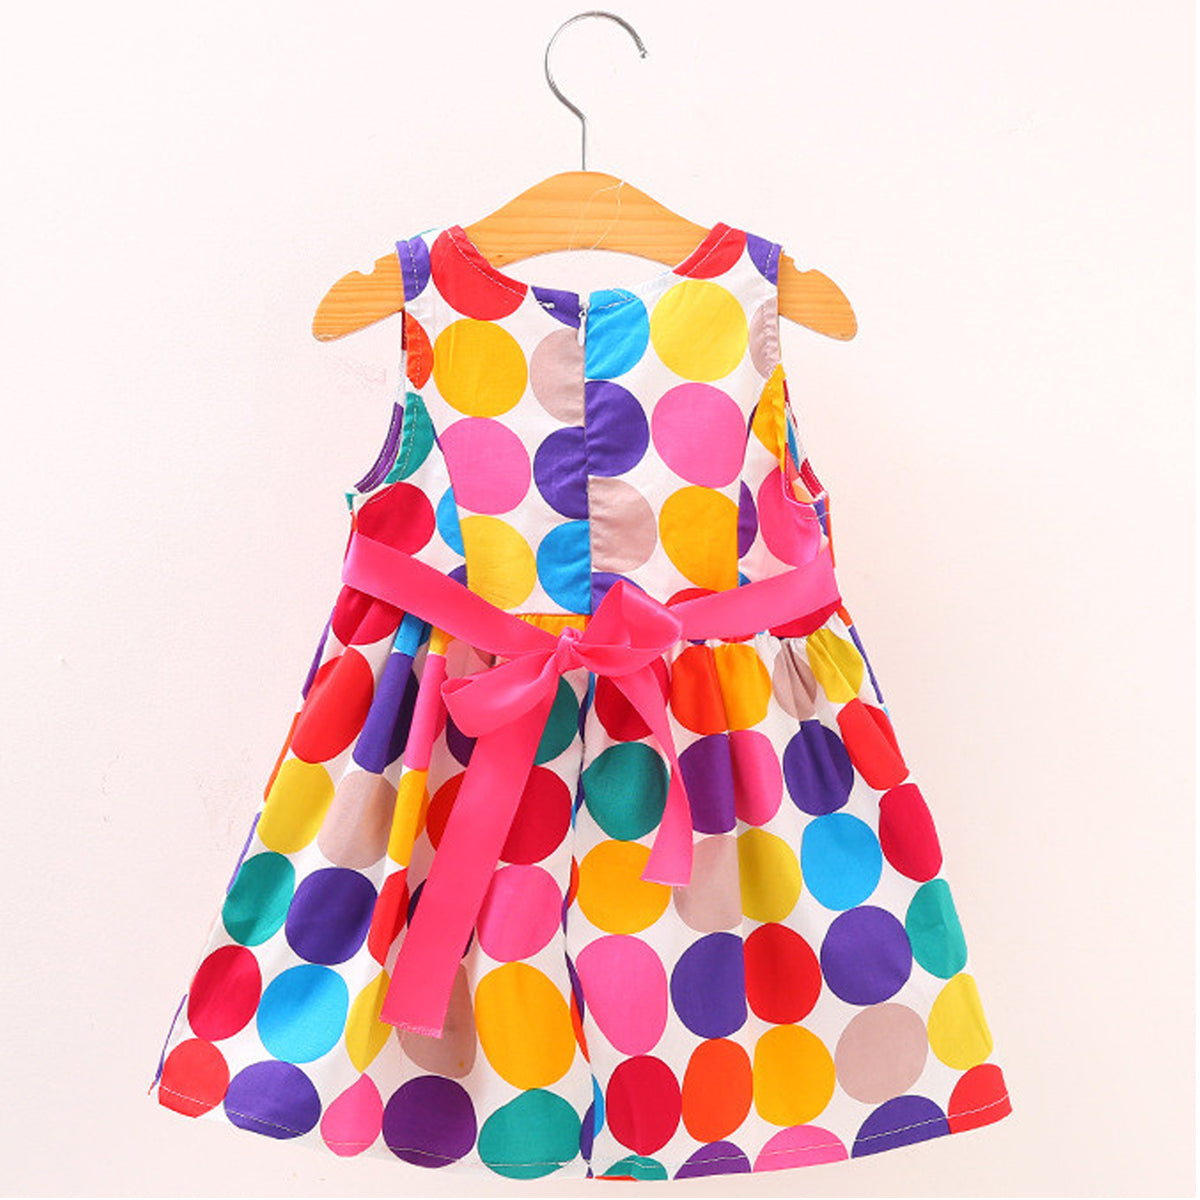 Venutaloza BabyGirl's Multicolour Round Stylish Frocks & Dresses for Kids.